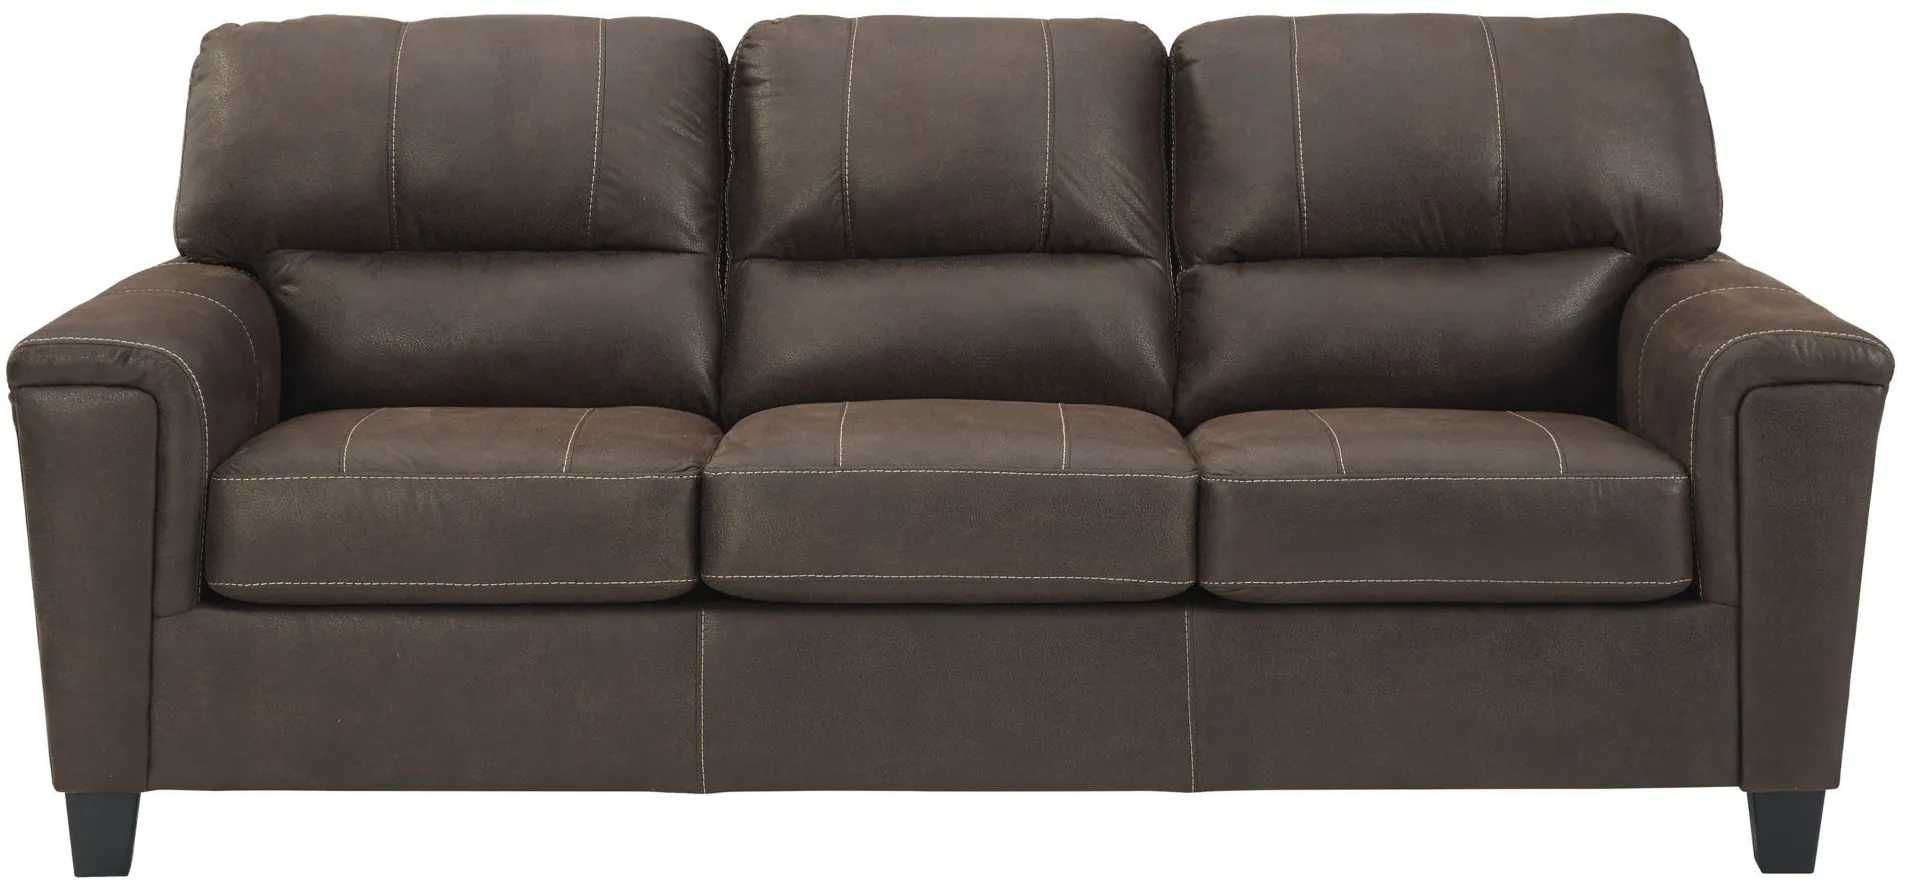 Navi Sofa in Chestnut by Ashley Furniture